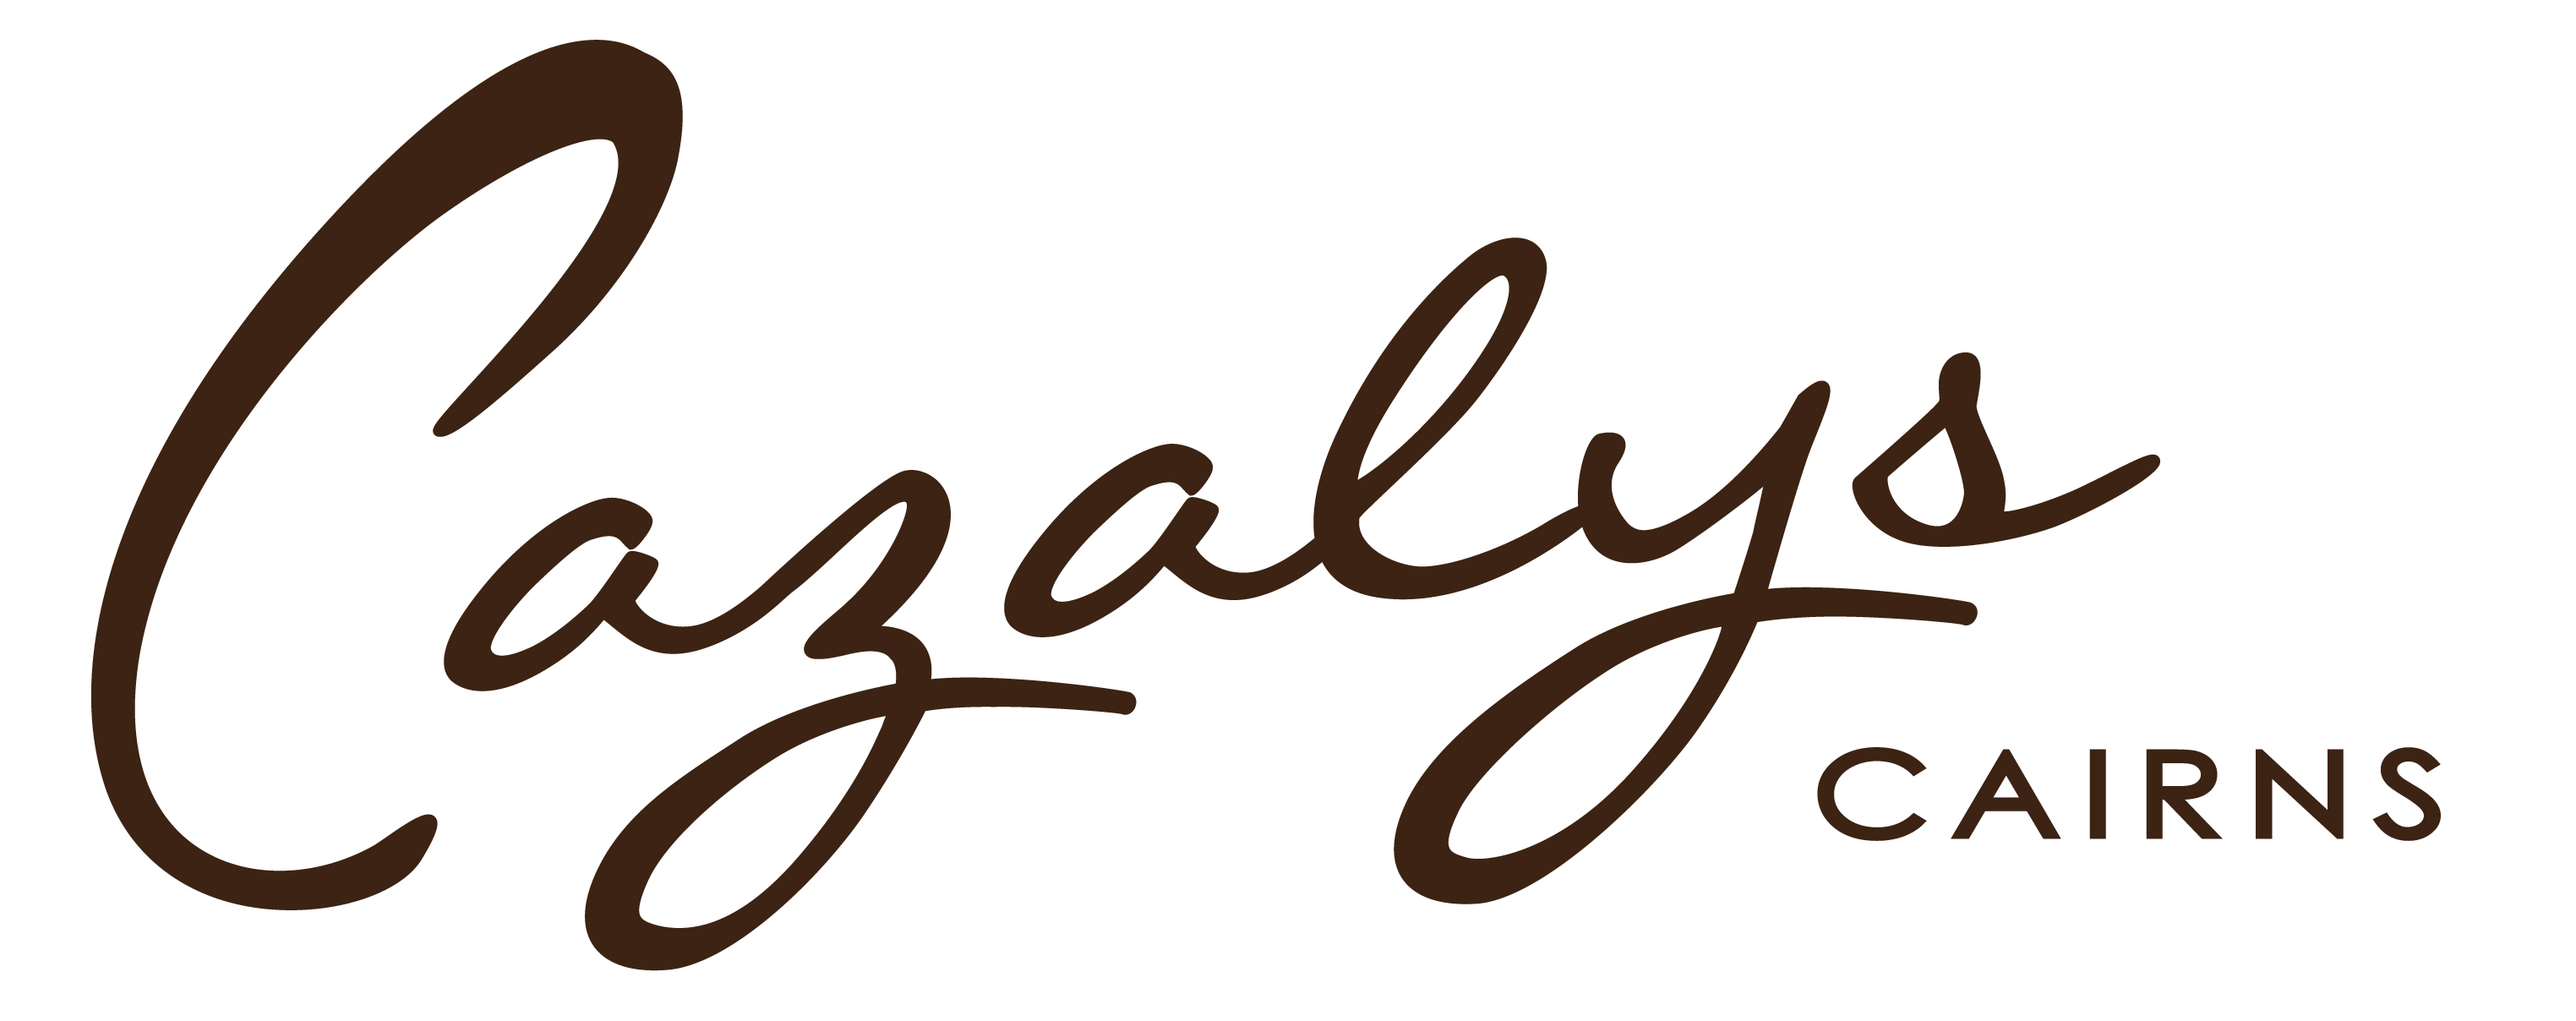 Cazalys Cairns logo 2013